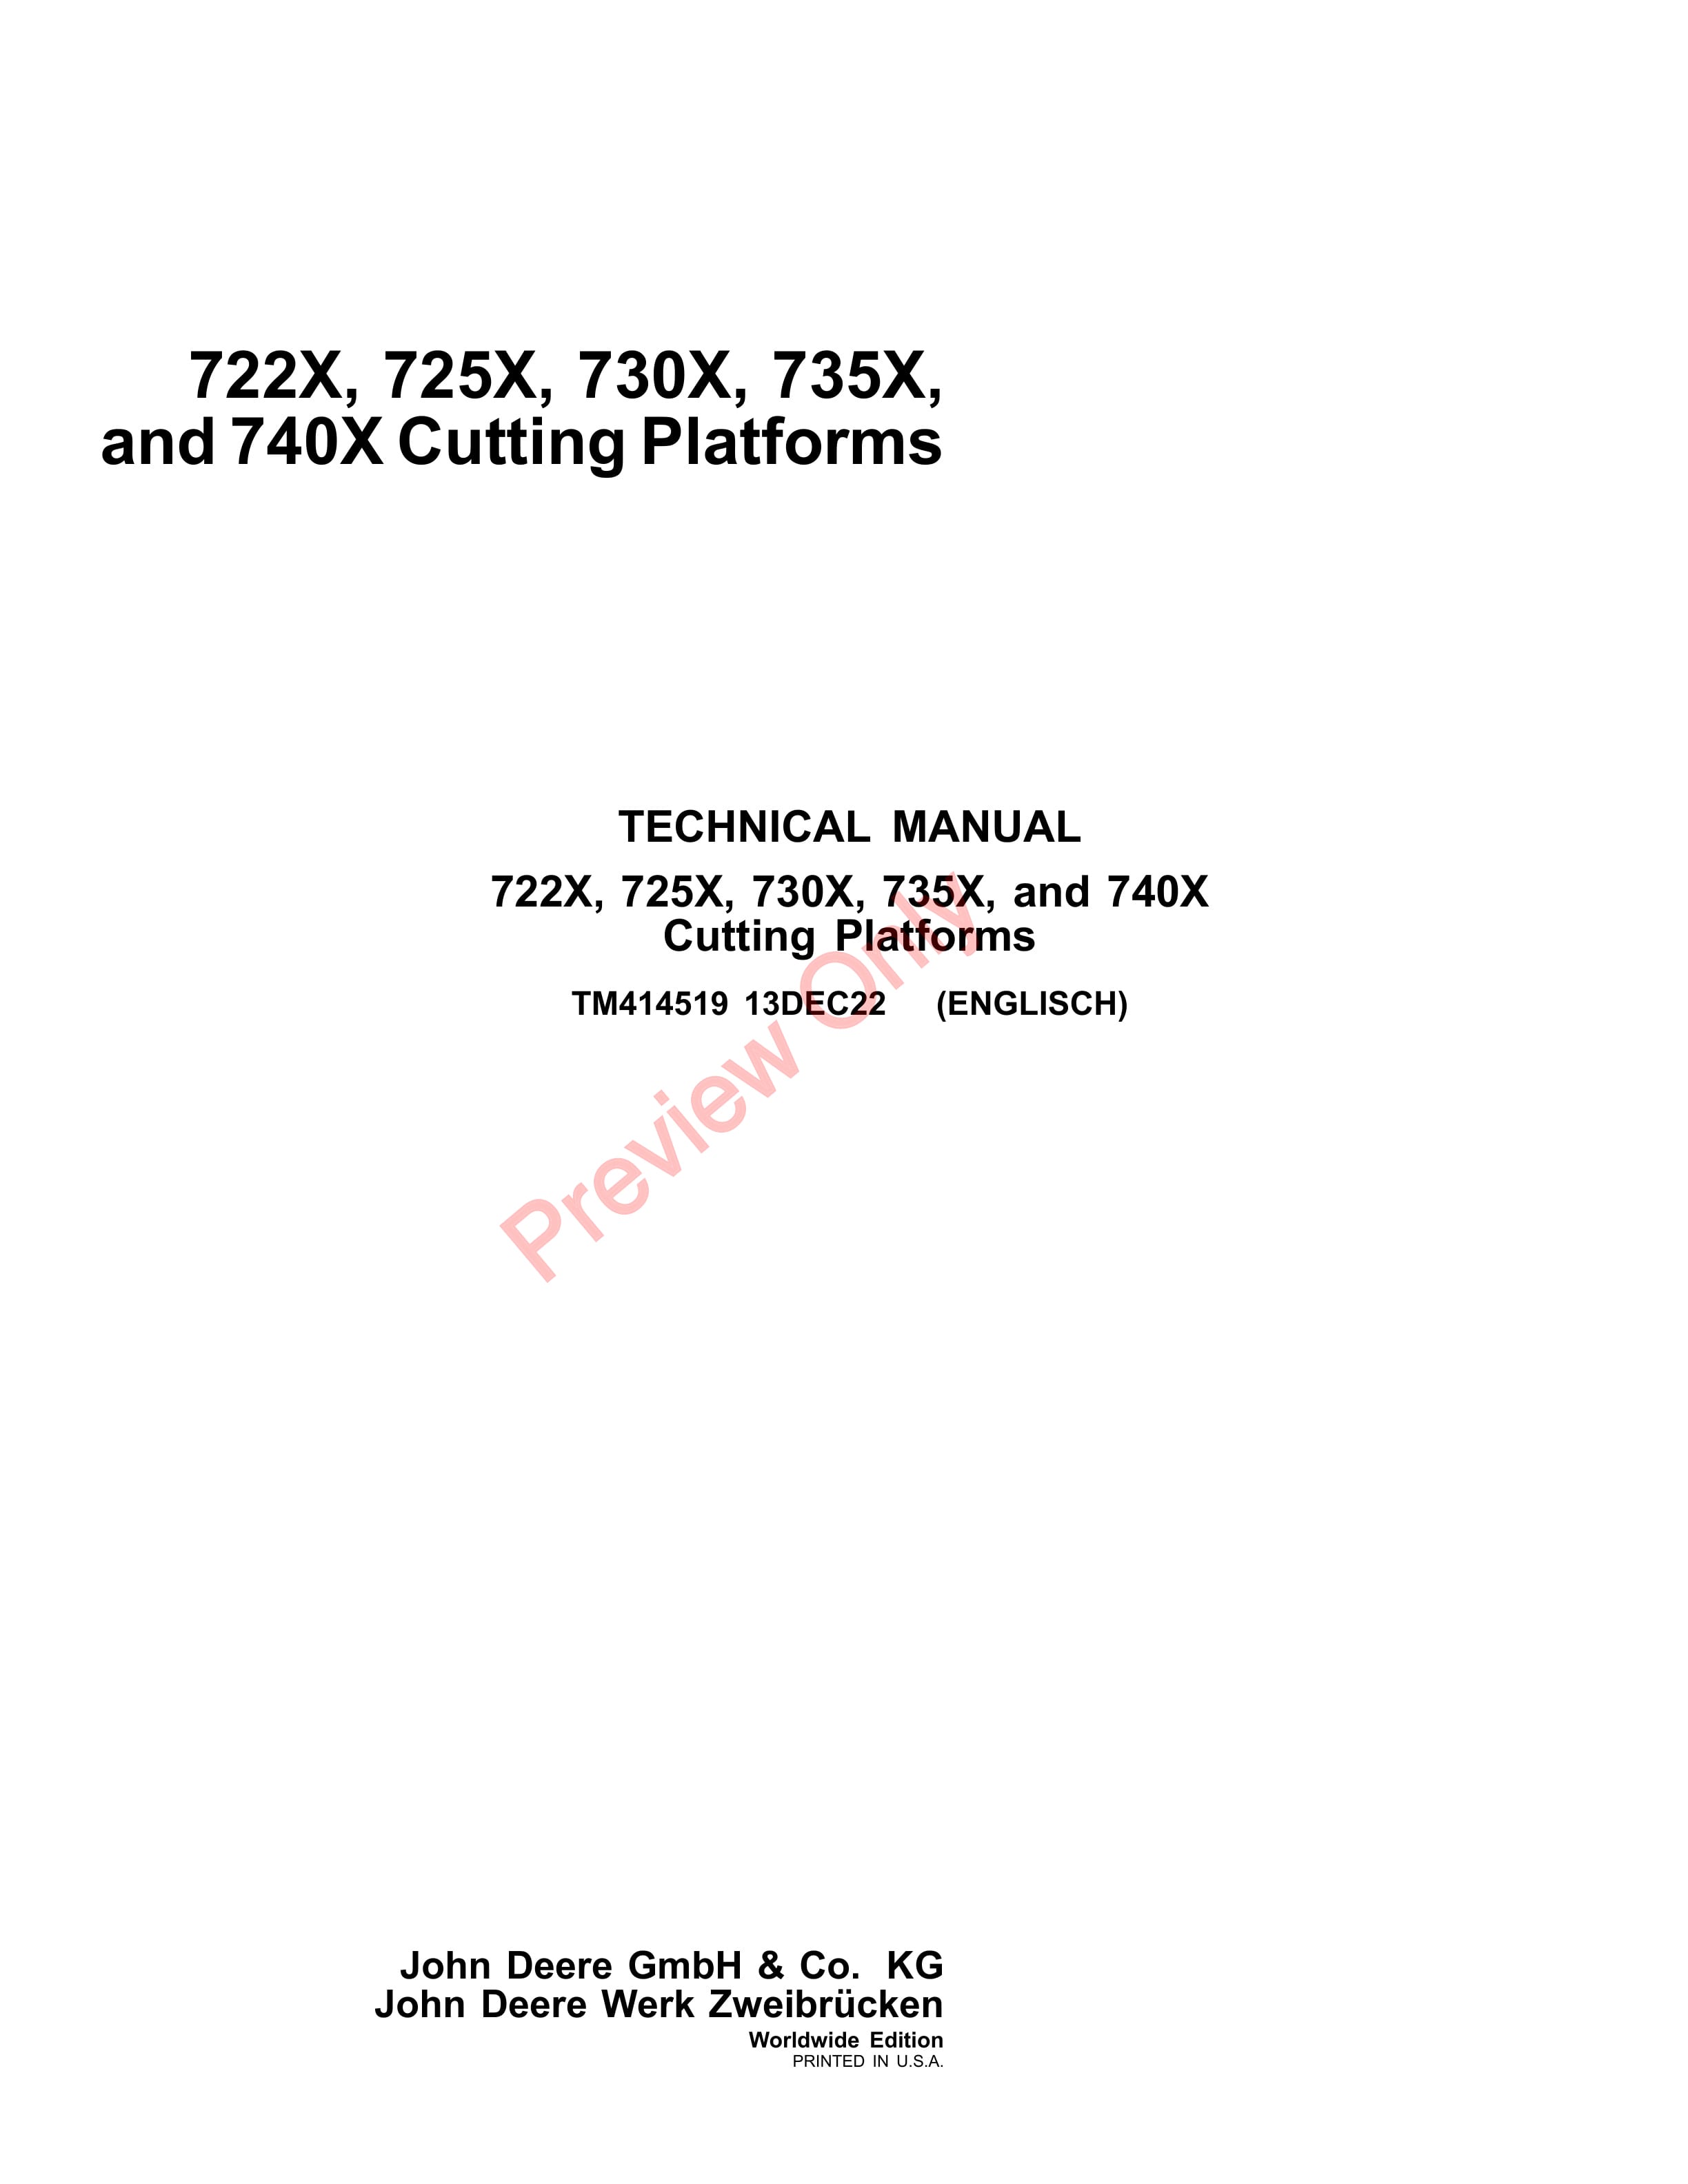 John Deere 722X 725X 730X 735X and 740X Cutting Platforms 062000 Technical Manual TM414519 13DEC22 1